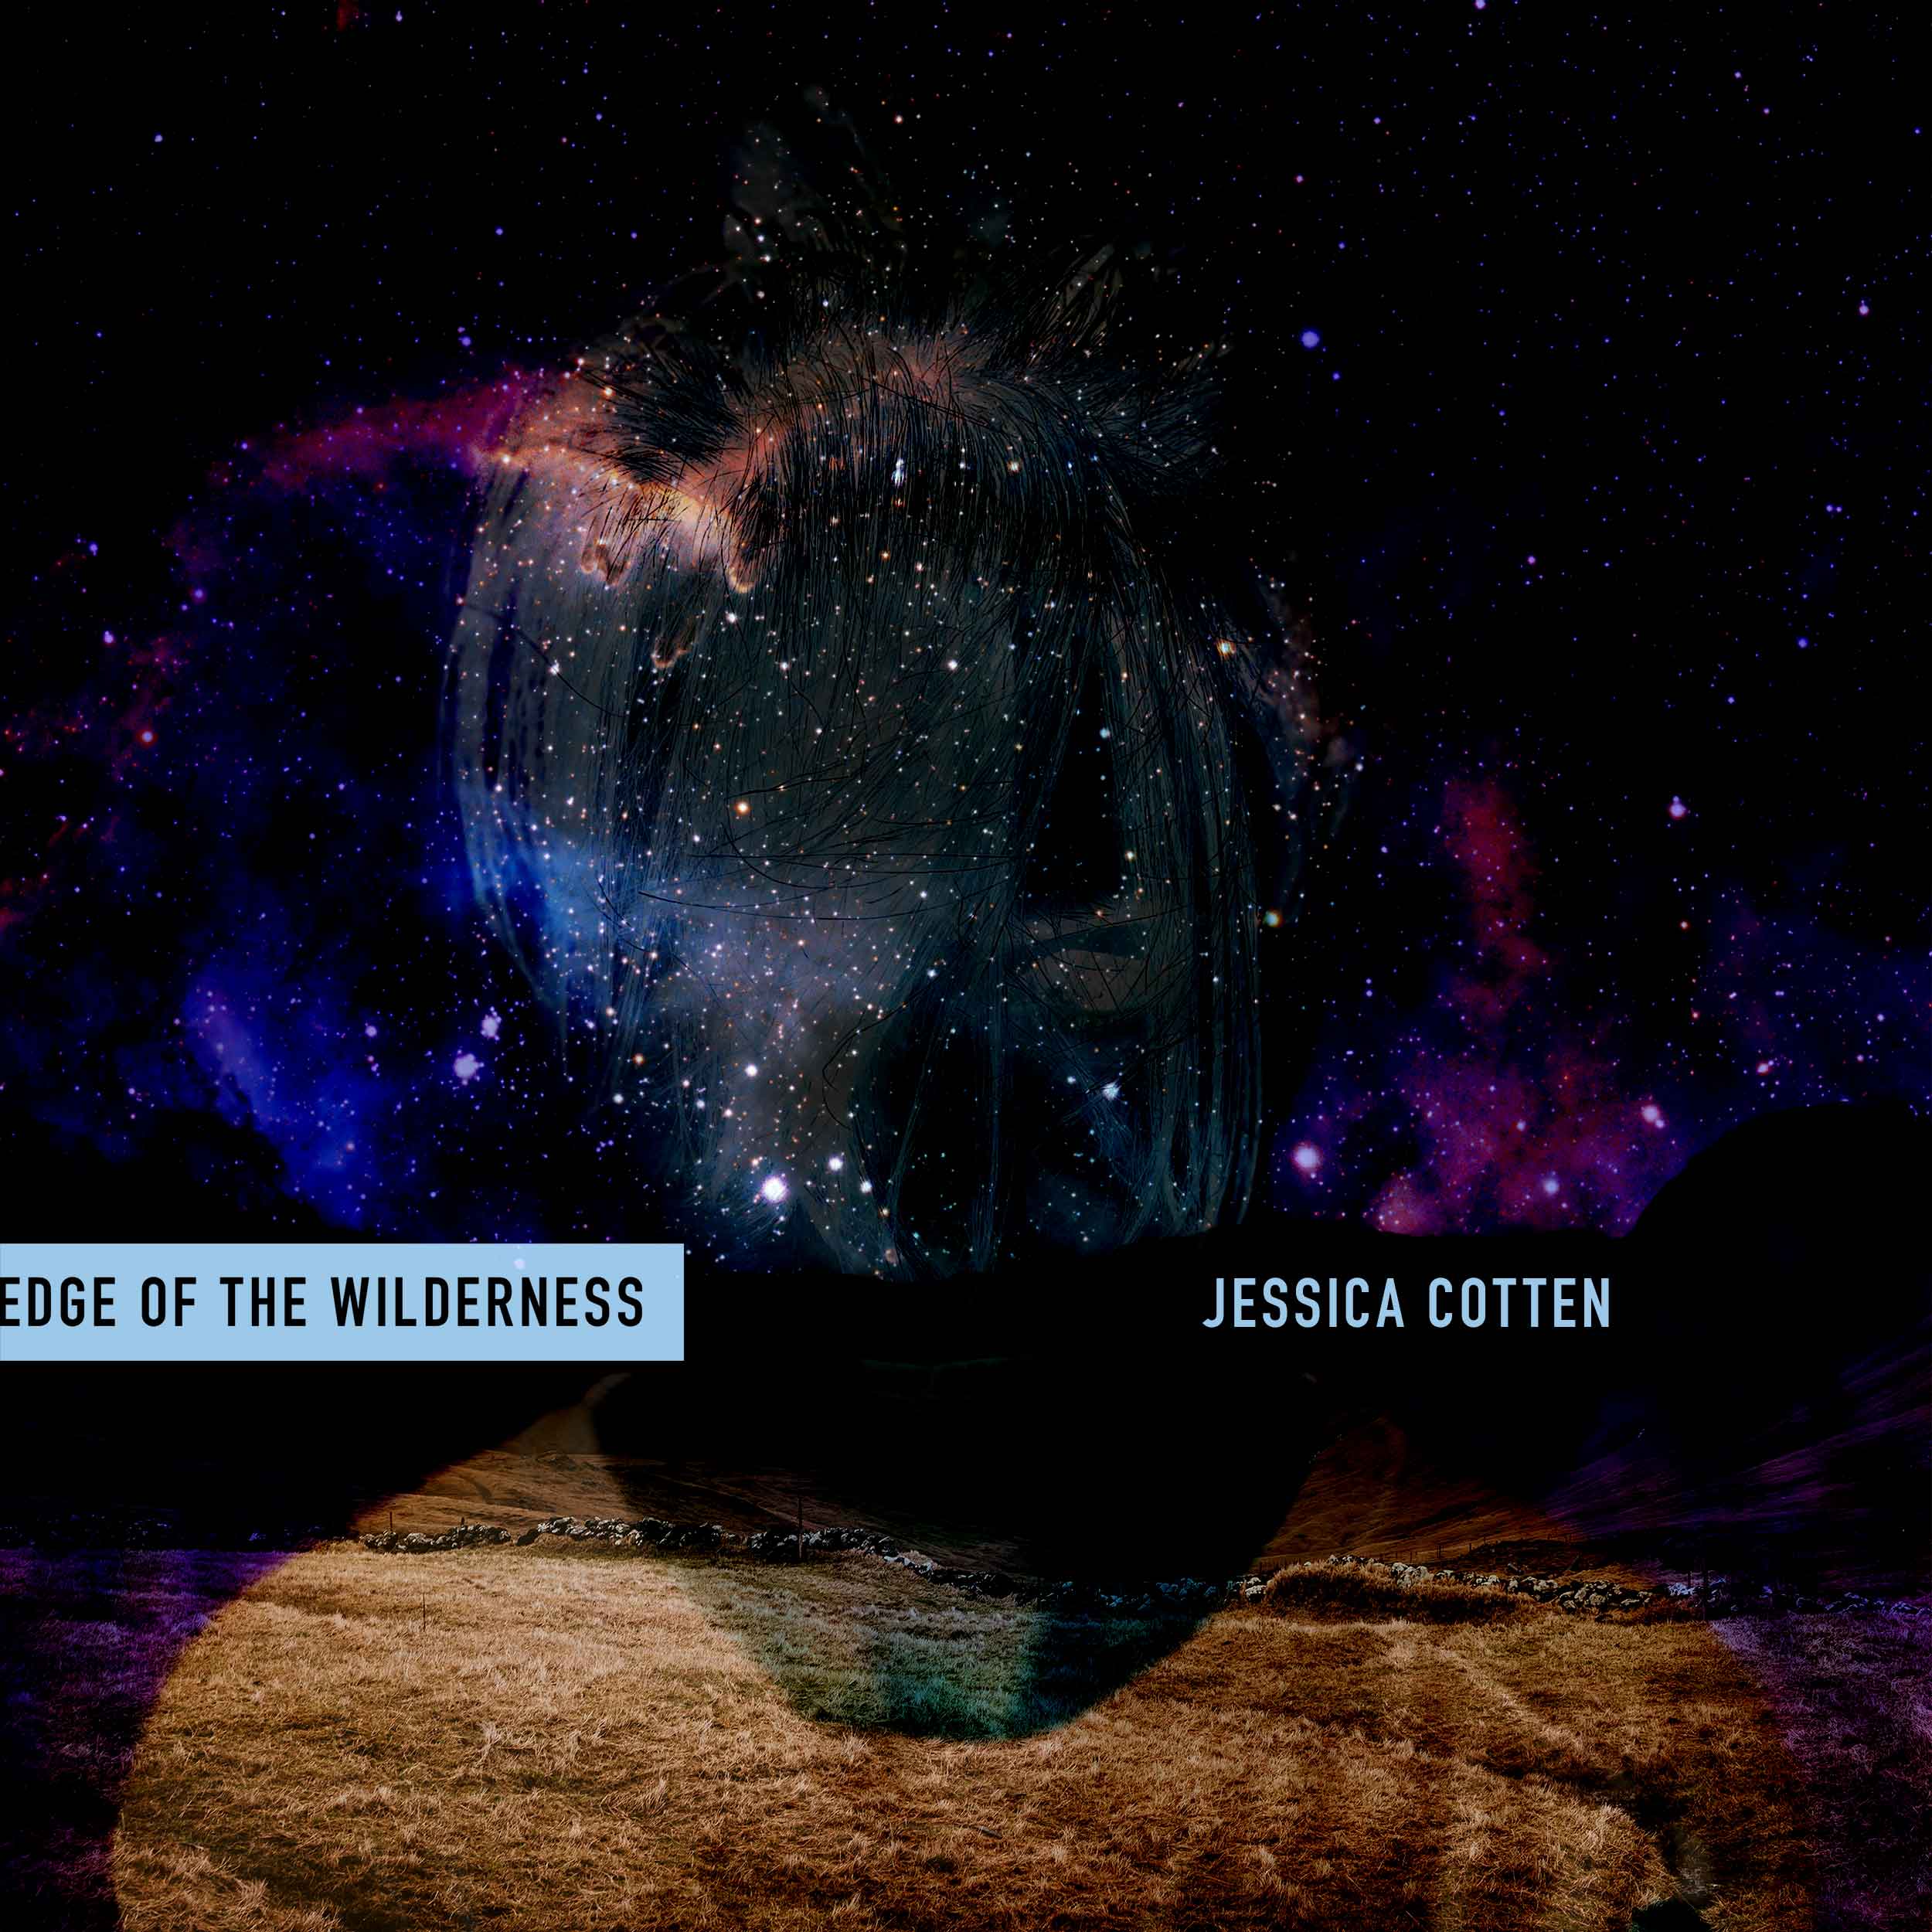 album artwork for jessica cotten's new electronica album Edge of the Wilderness